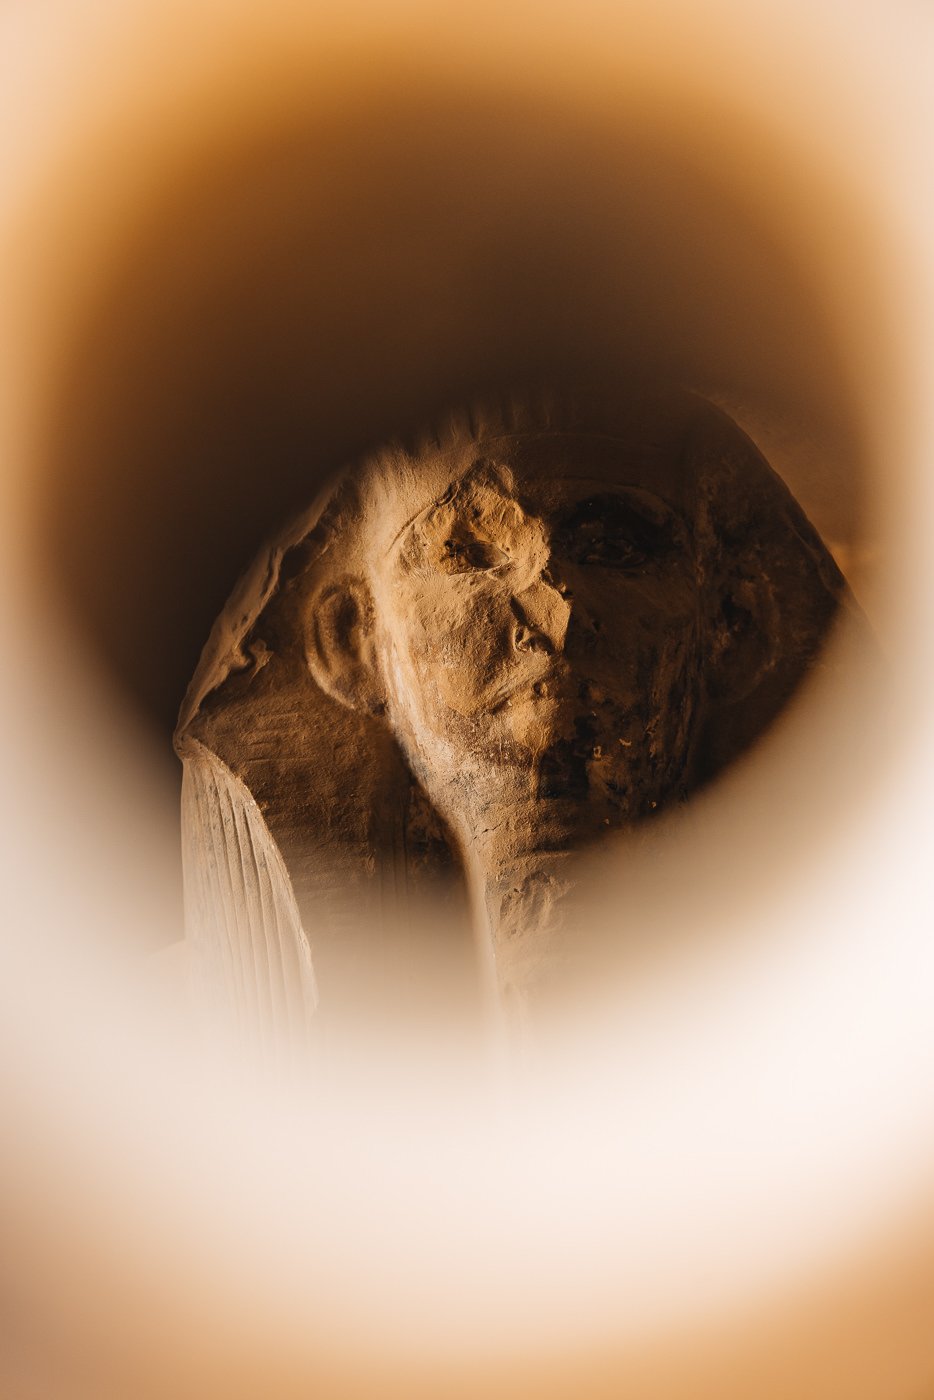 Mummy statue in Egypt